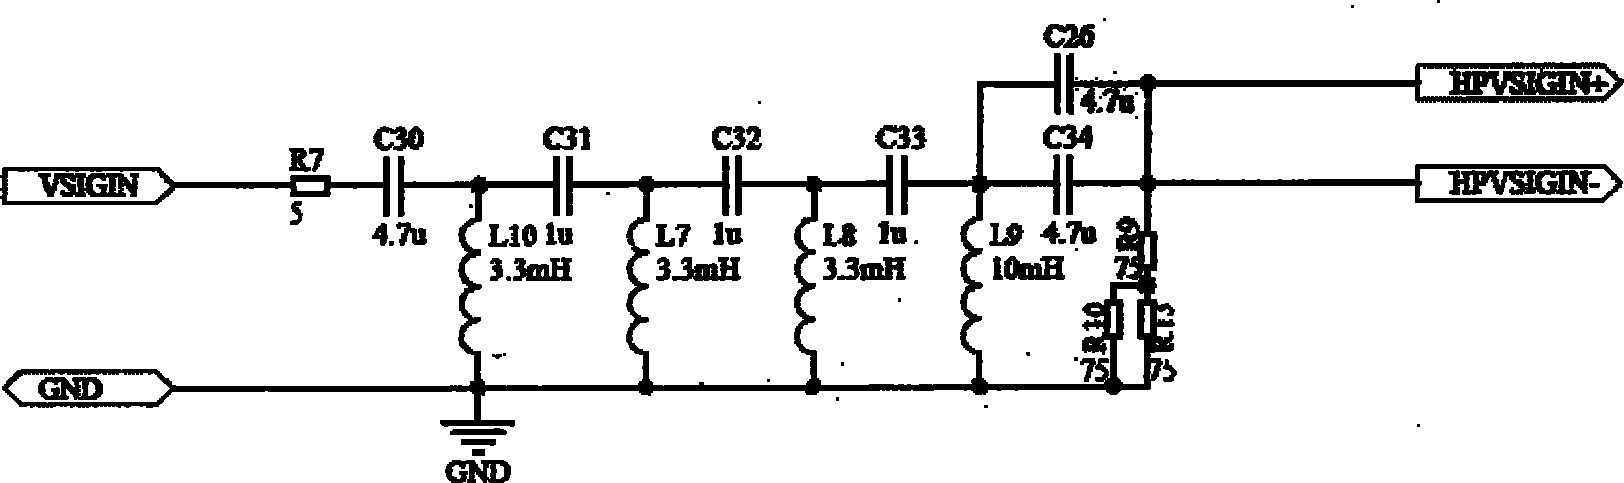 Biphase digital phase-locking amplifier and digital domain synchronous phase-locking algorithm thereof